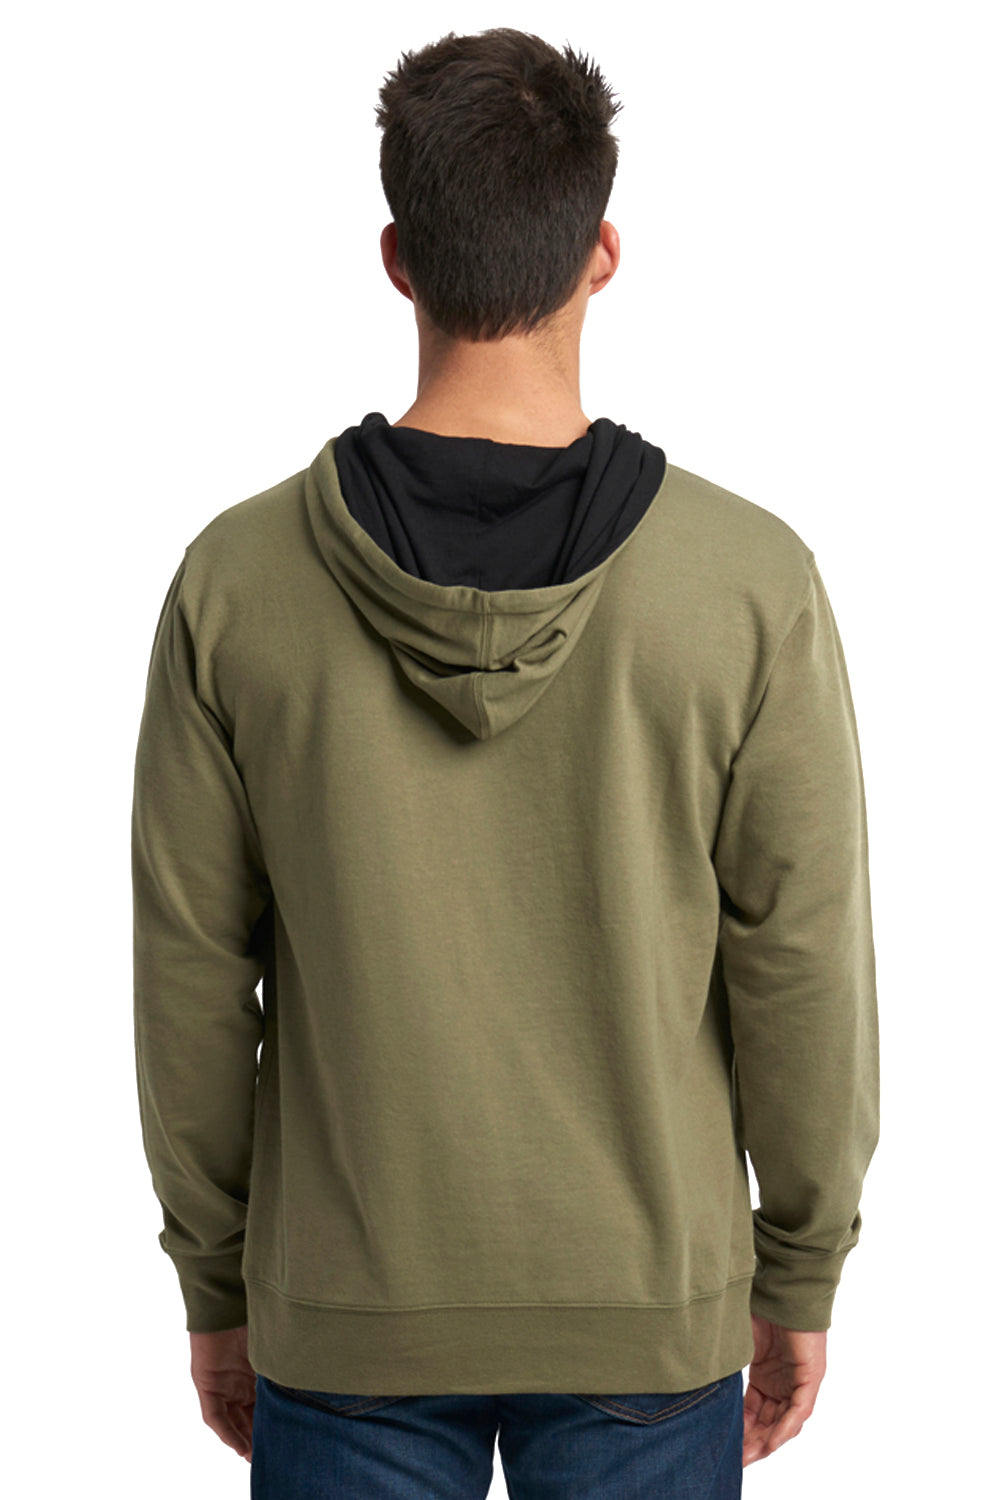 Next Level 9301 French Terry Fleece Hooded Sweatshirt Hoodie Military Green/Black Back